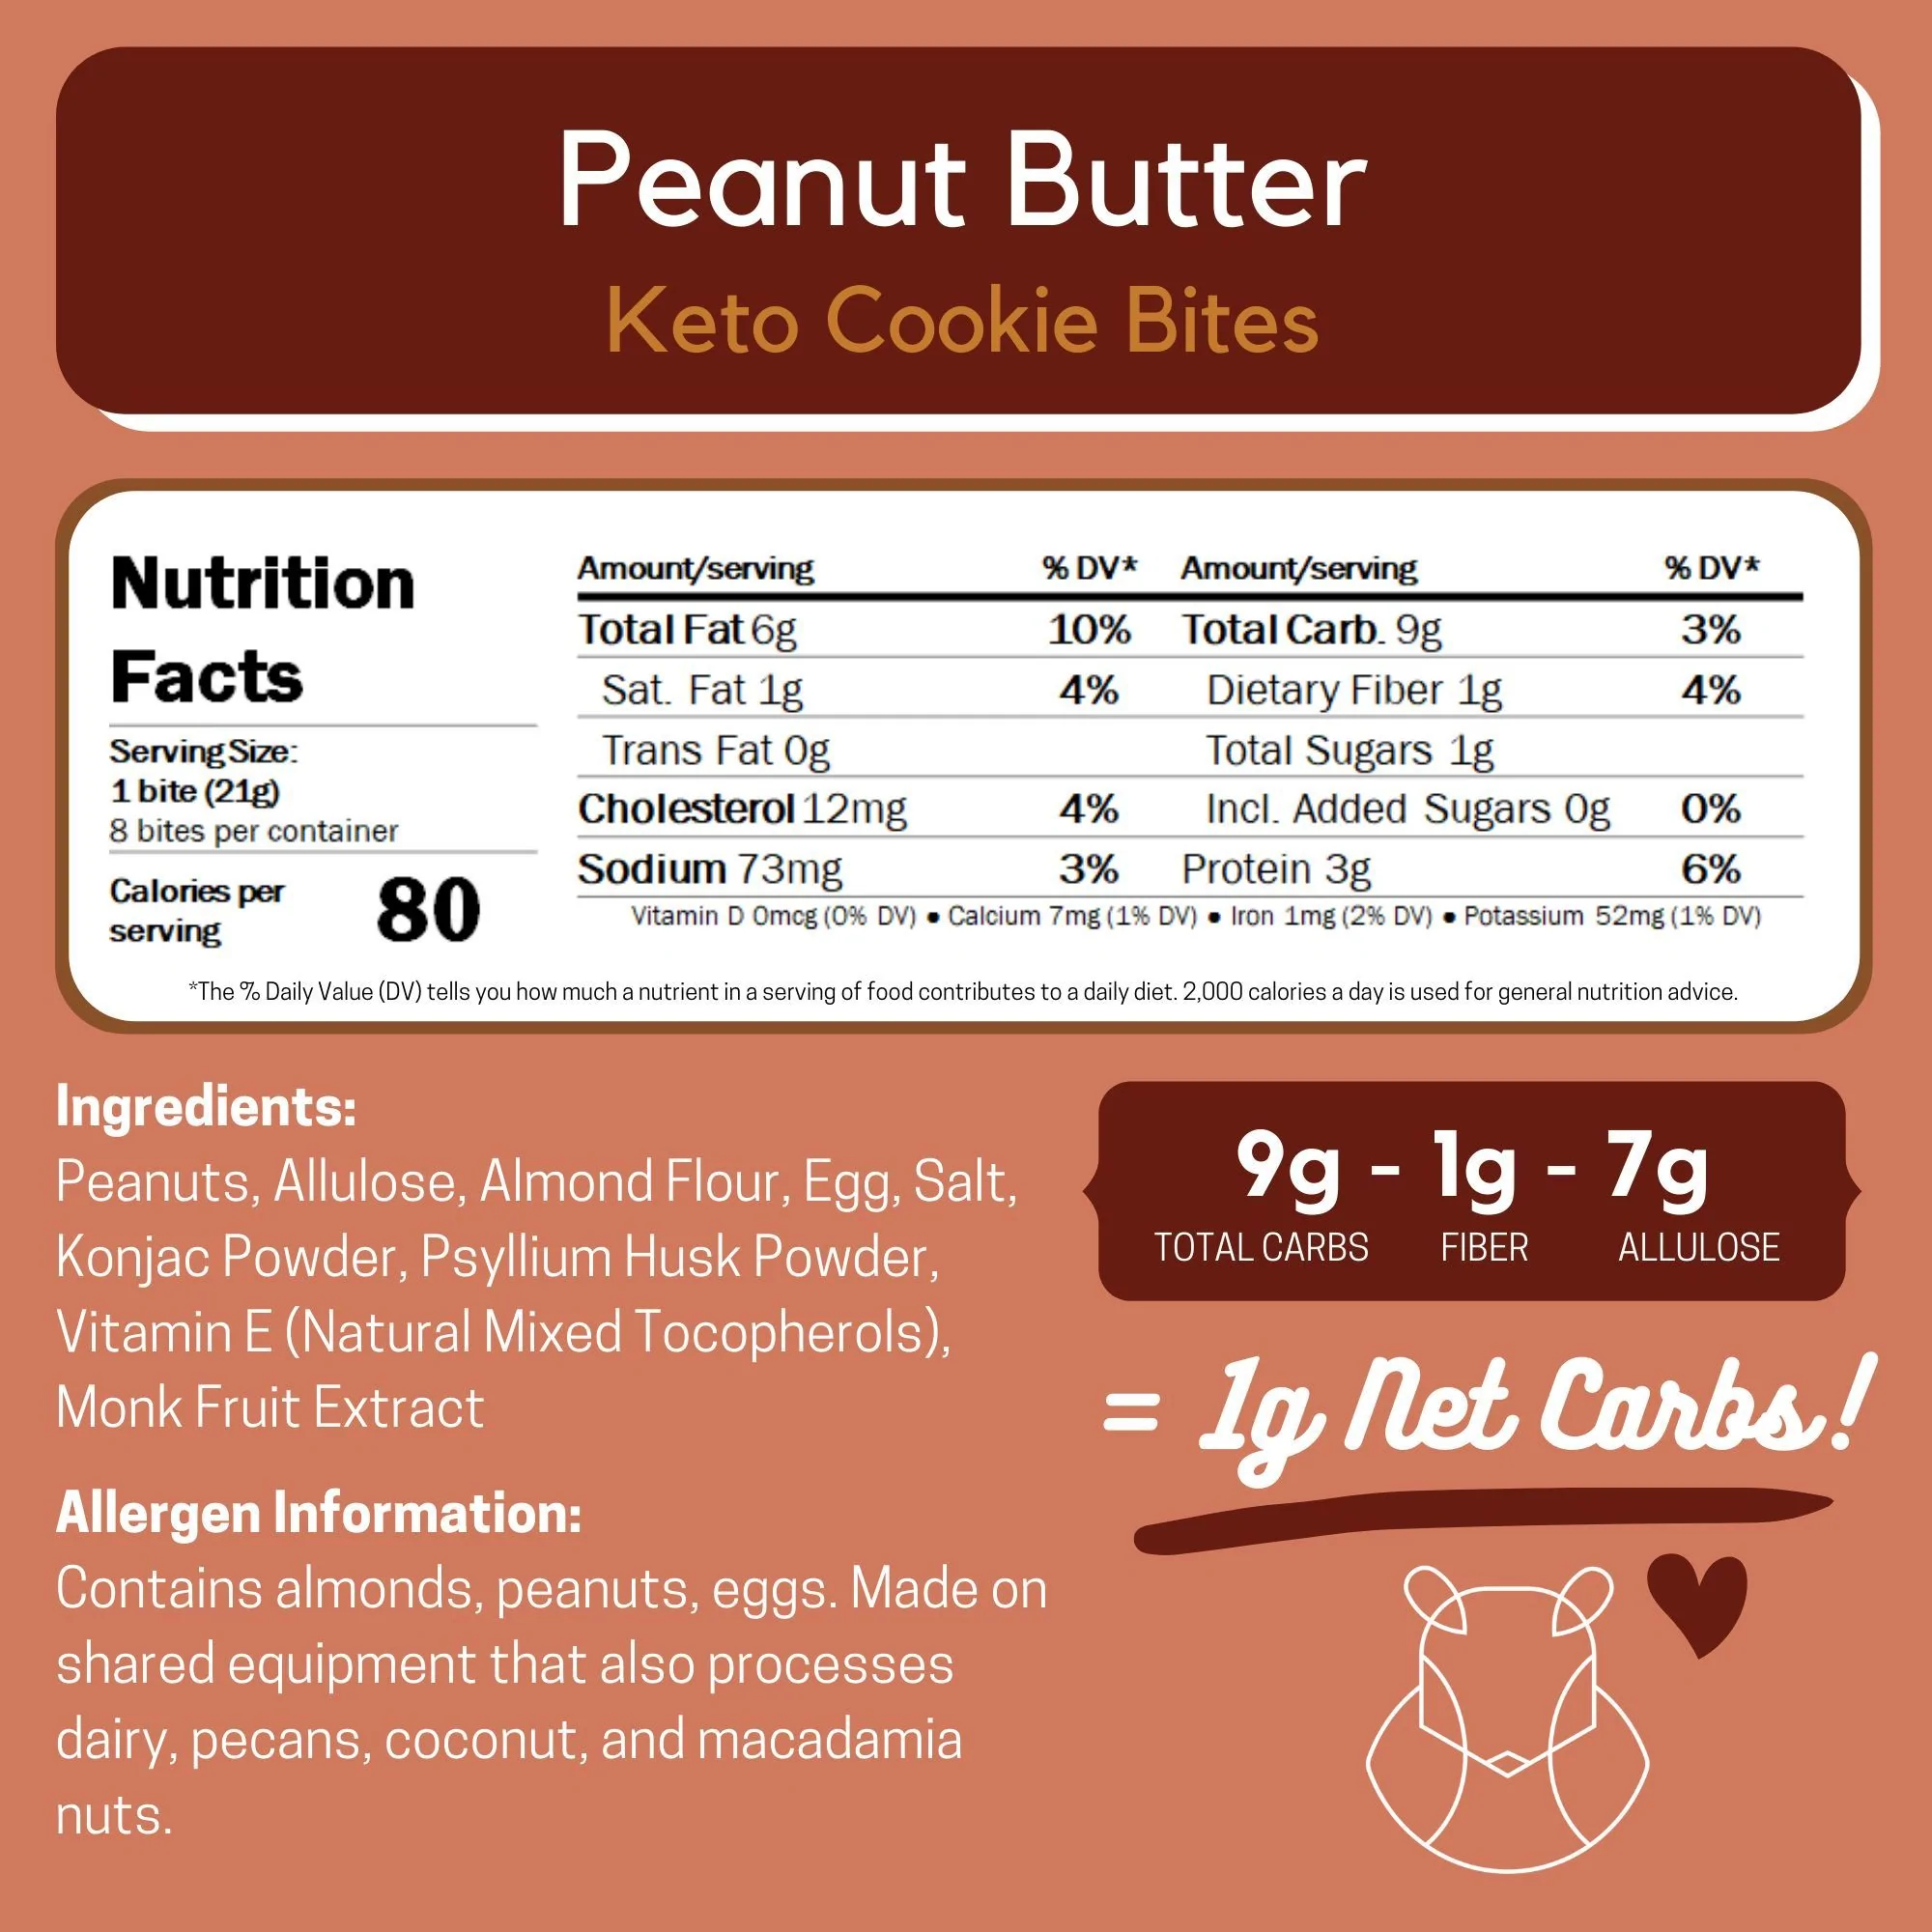 ChipMonk Keto Cookie Bites Peanut Butter Nutrition Facts